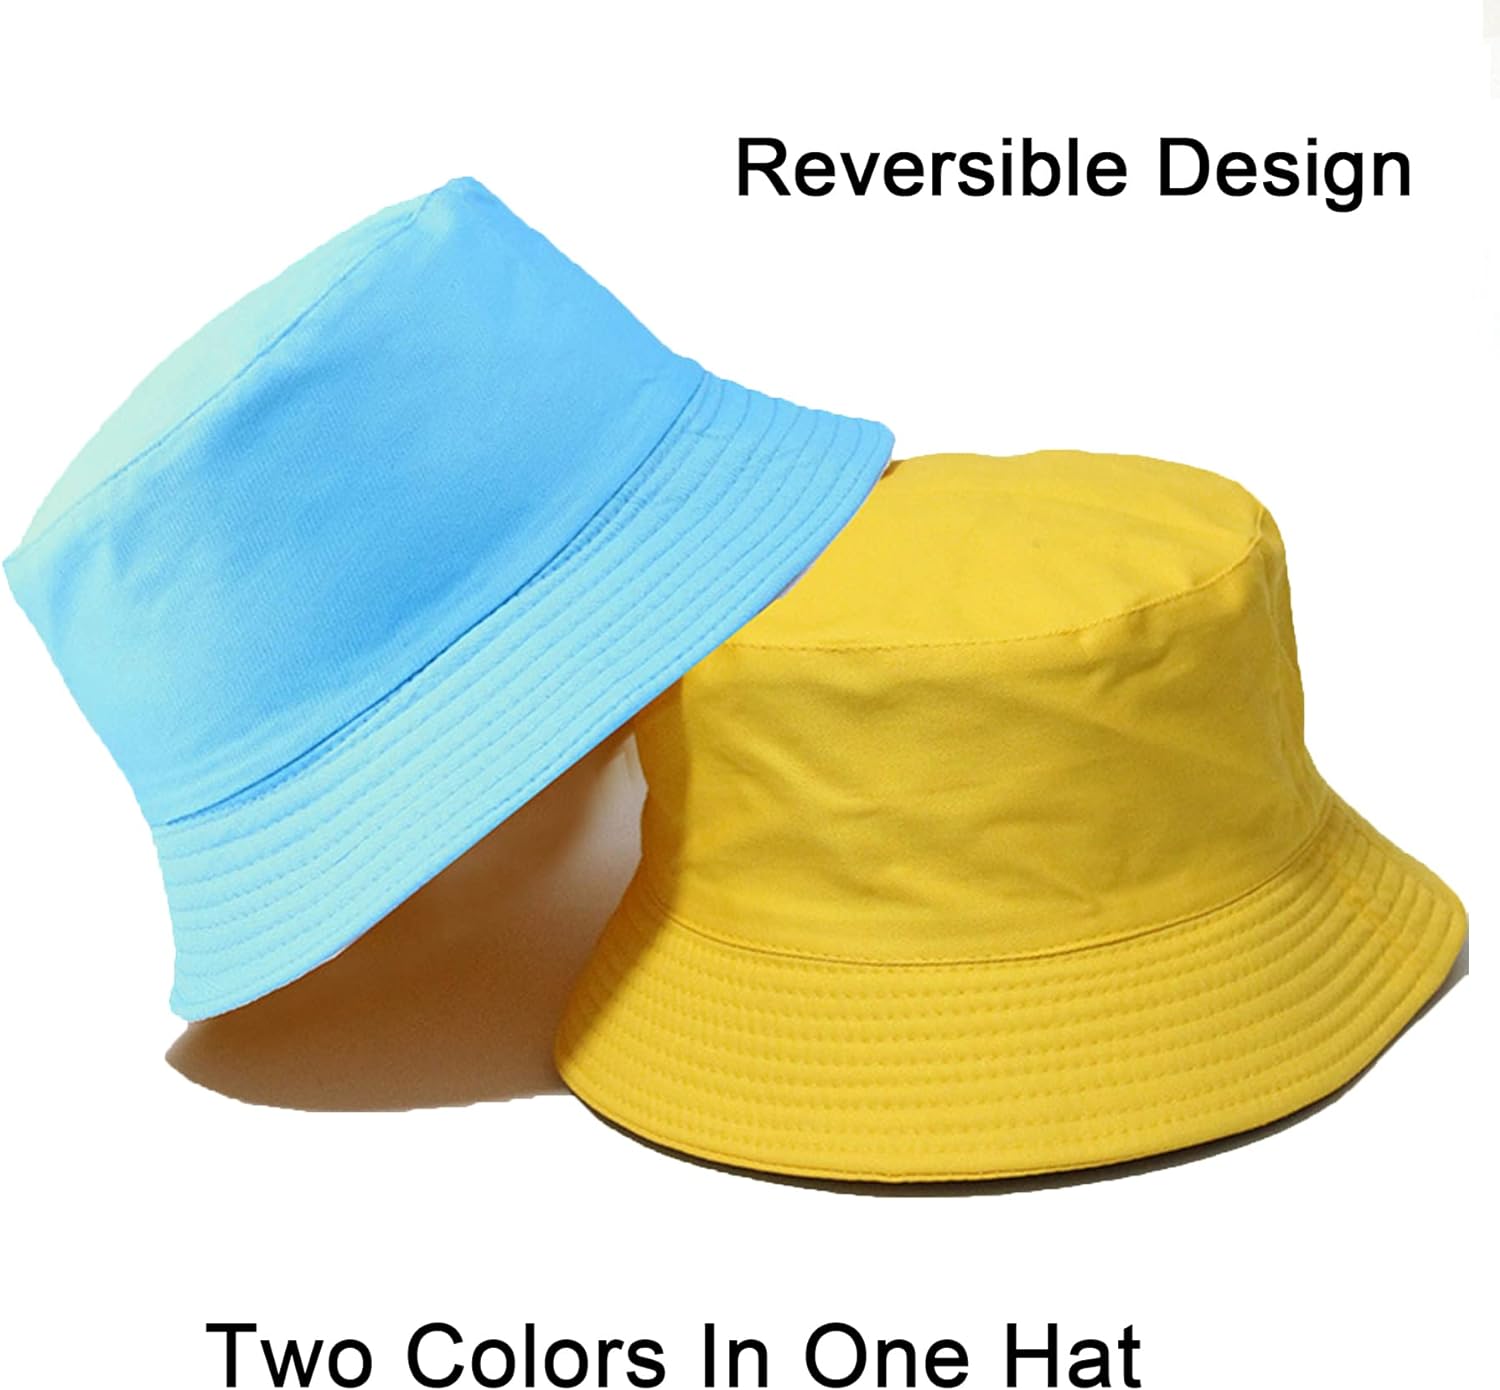 PFFY Bucket Hat for Women Men Cotton Summer Sun Beach Fishing Cap - PFFY Bucket Hat Review